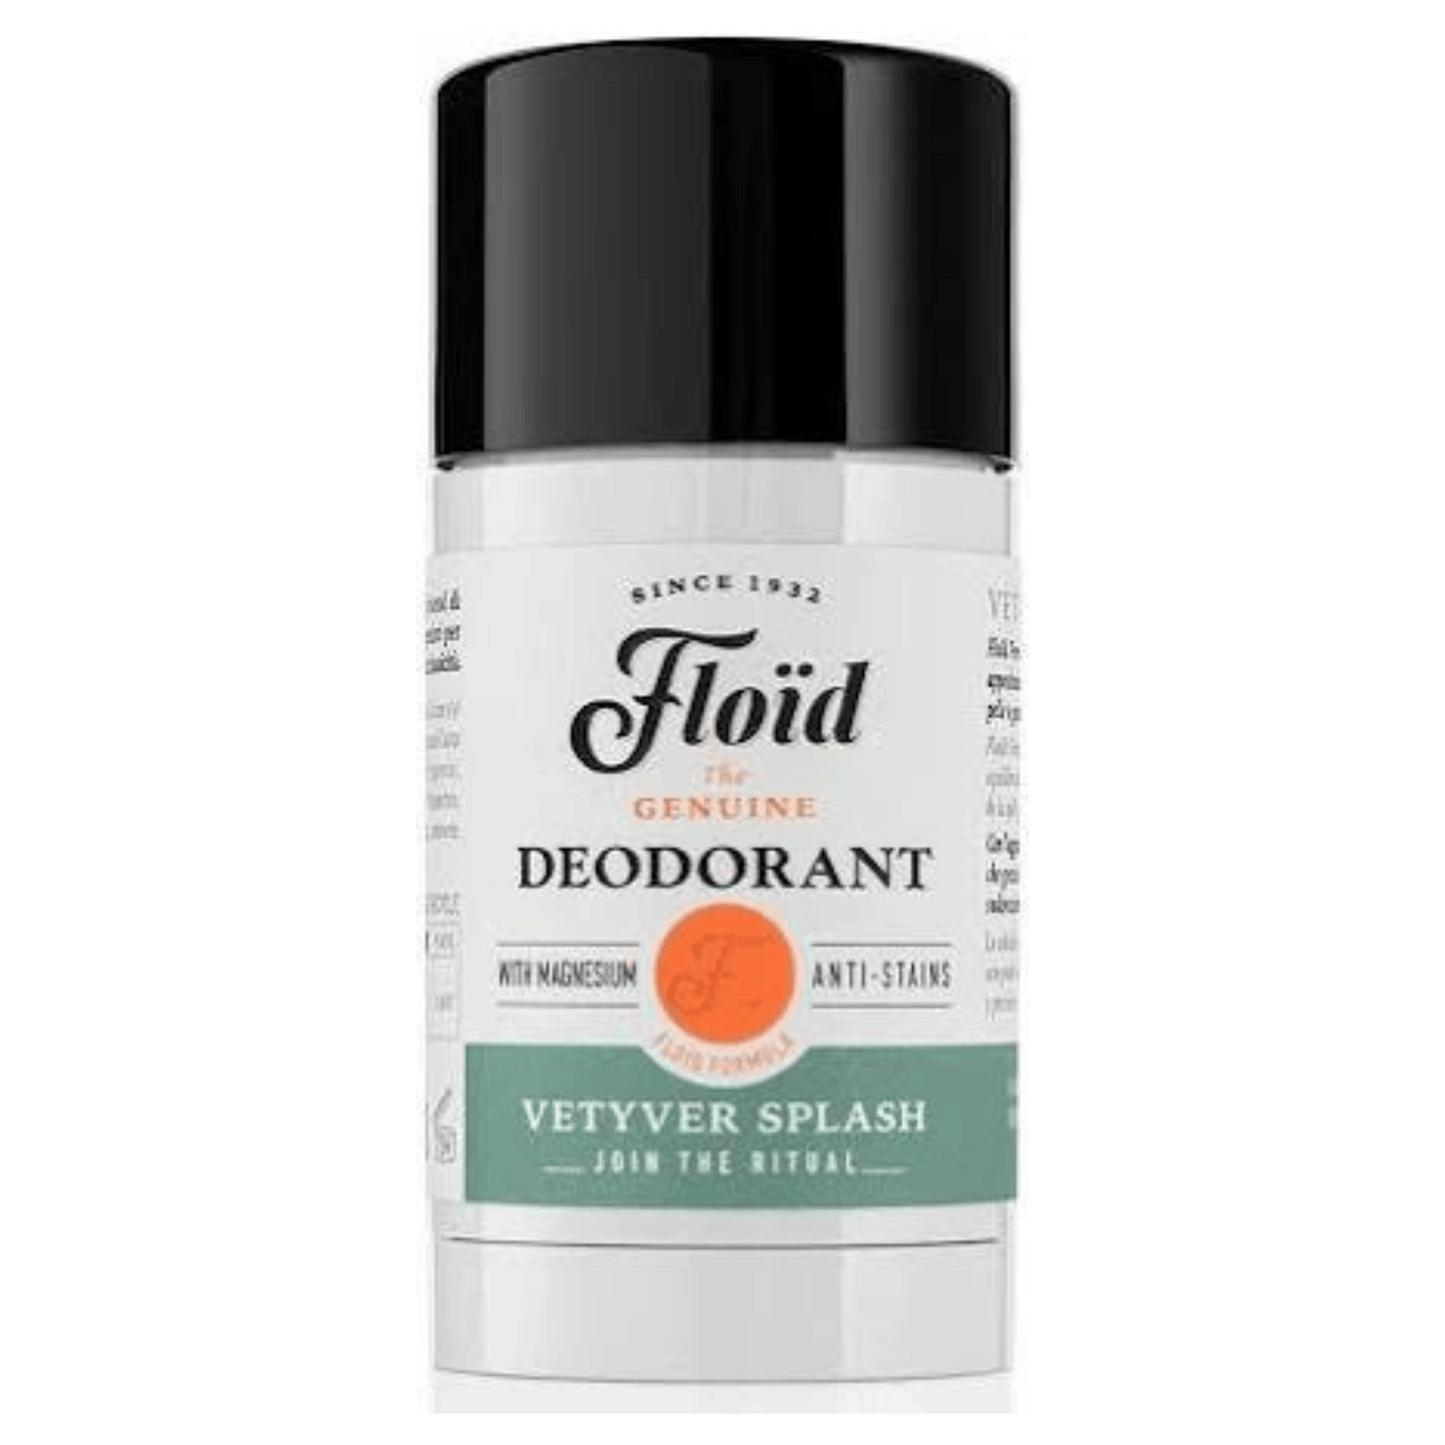 Primary Image of Vetyver Splash - Deodorant